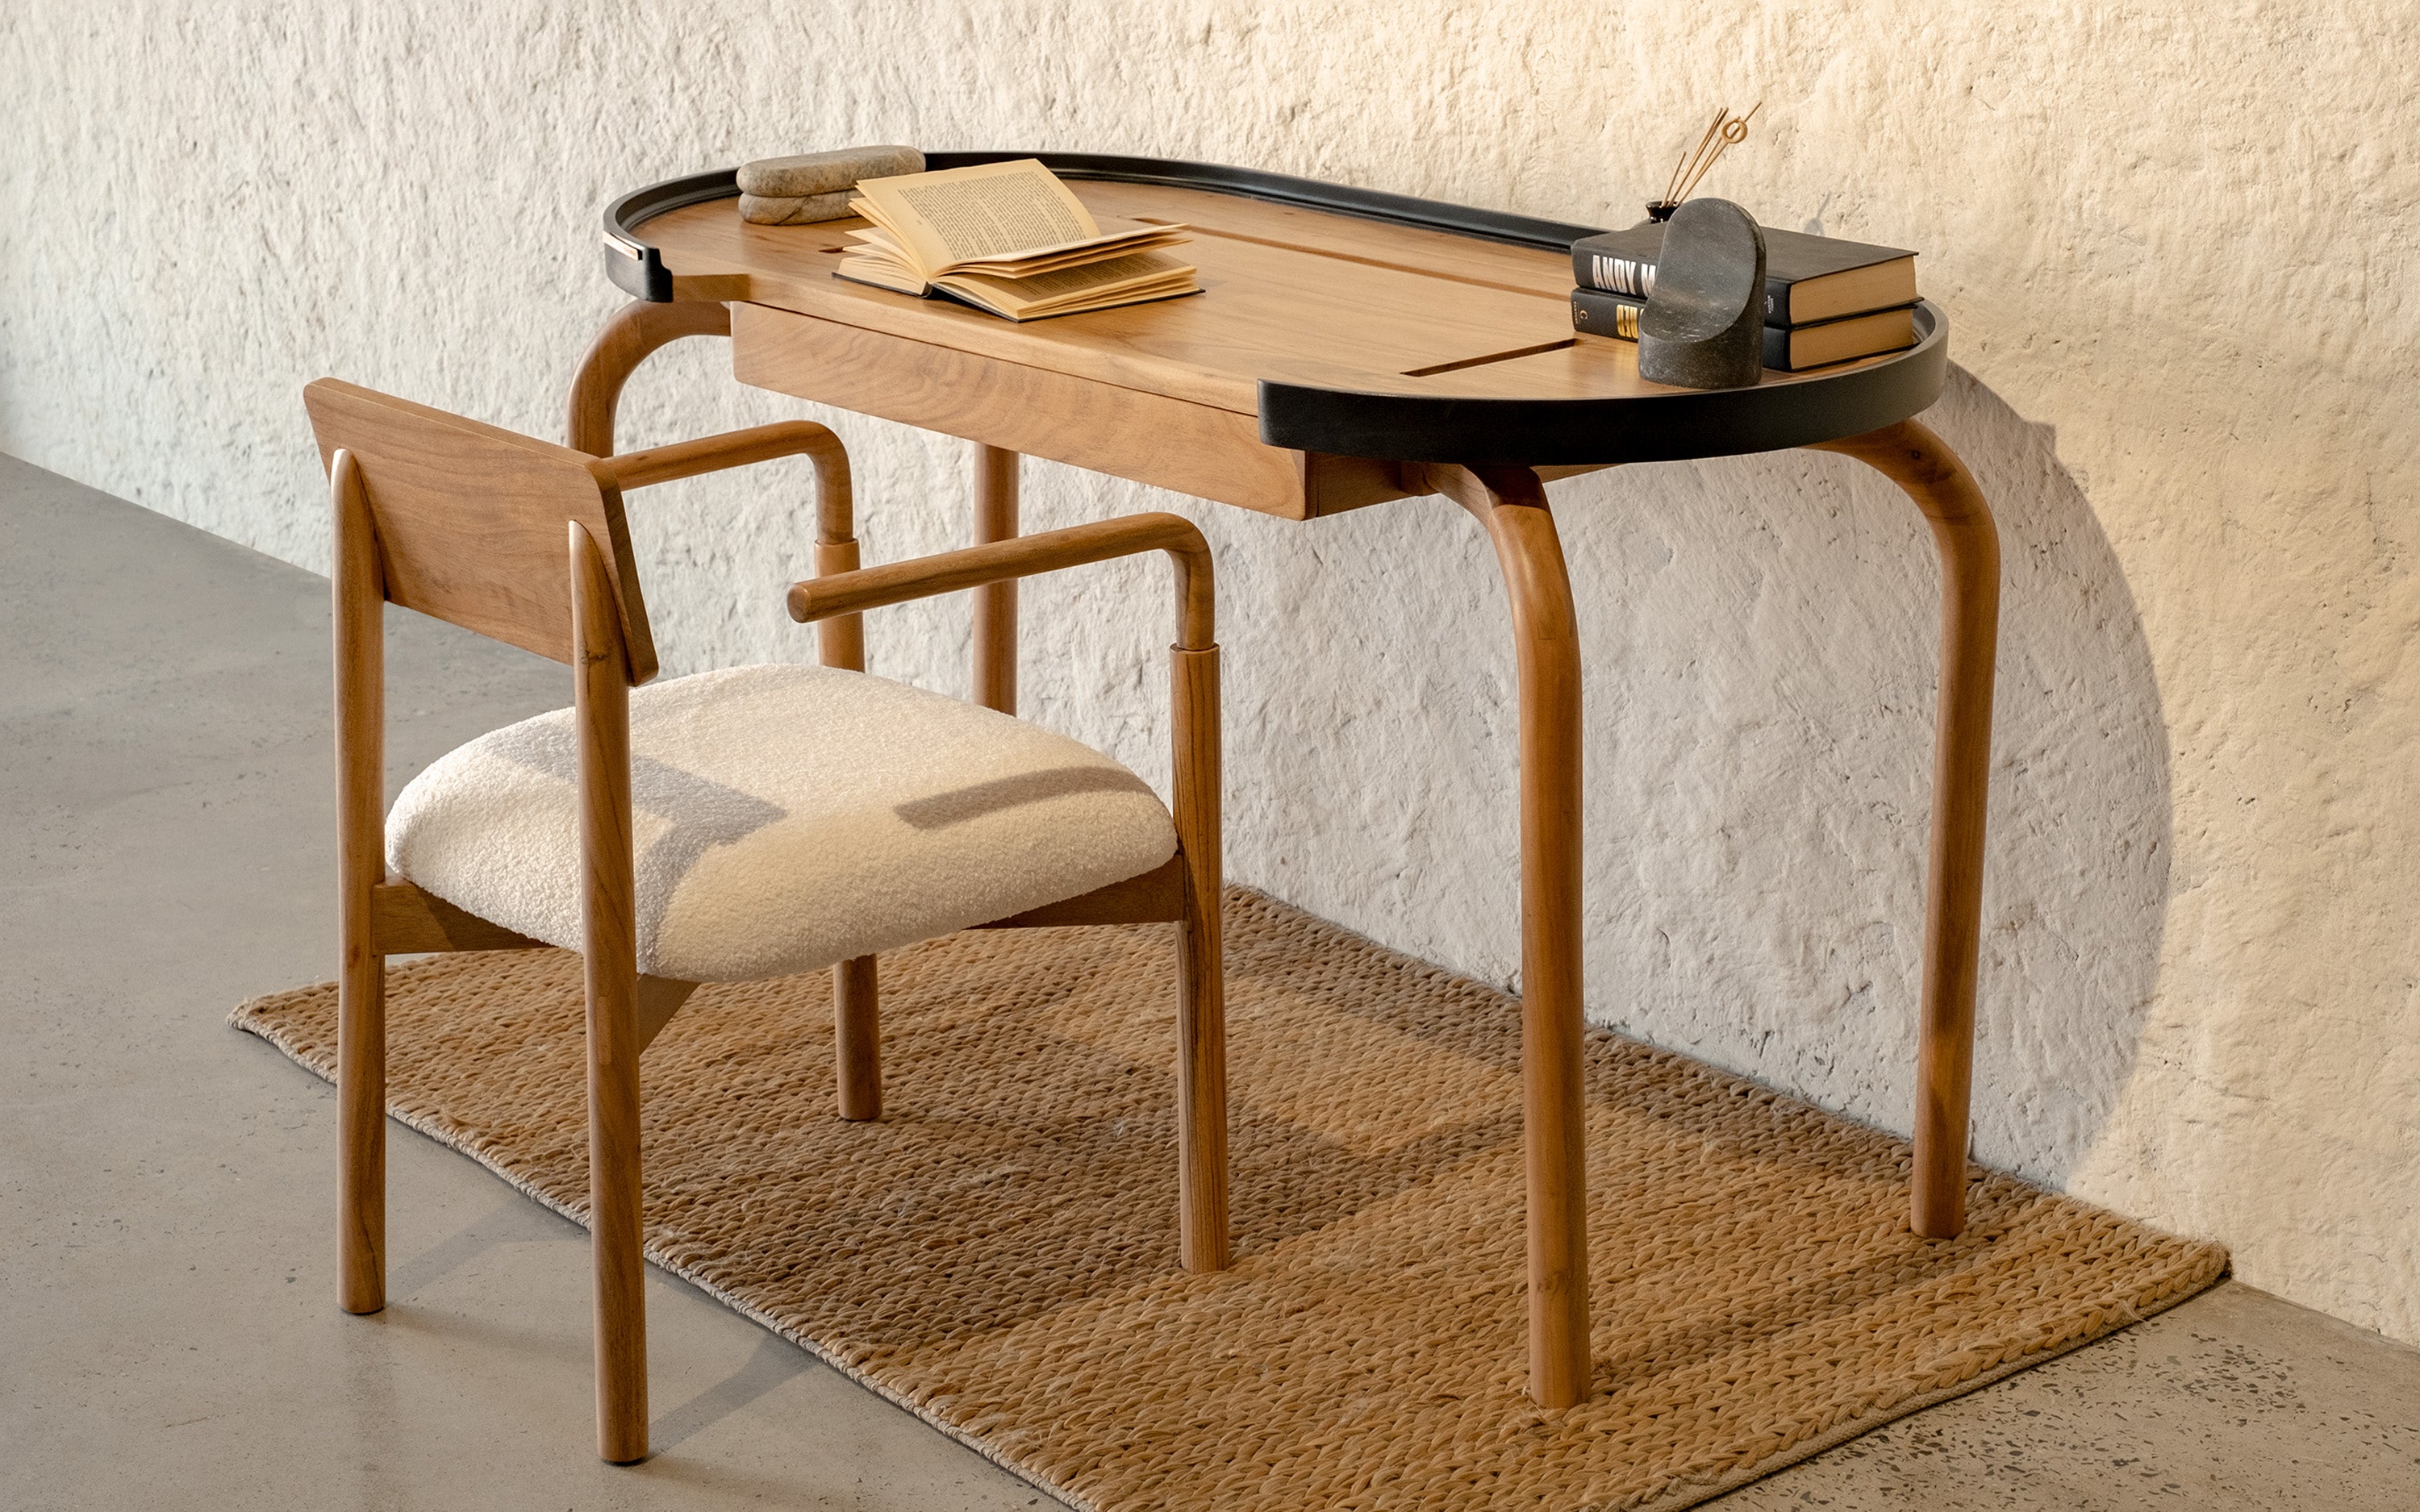 Andaman study table and chair. Andaman study table with chair. Andaman study table and chair set for adults. OT Home